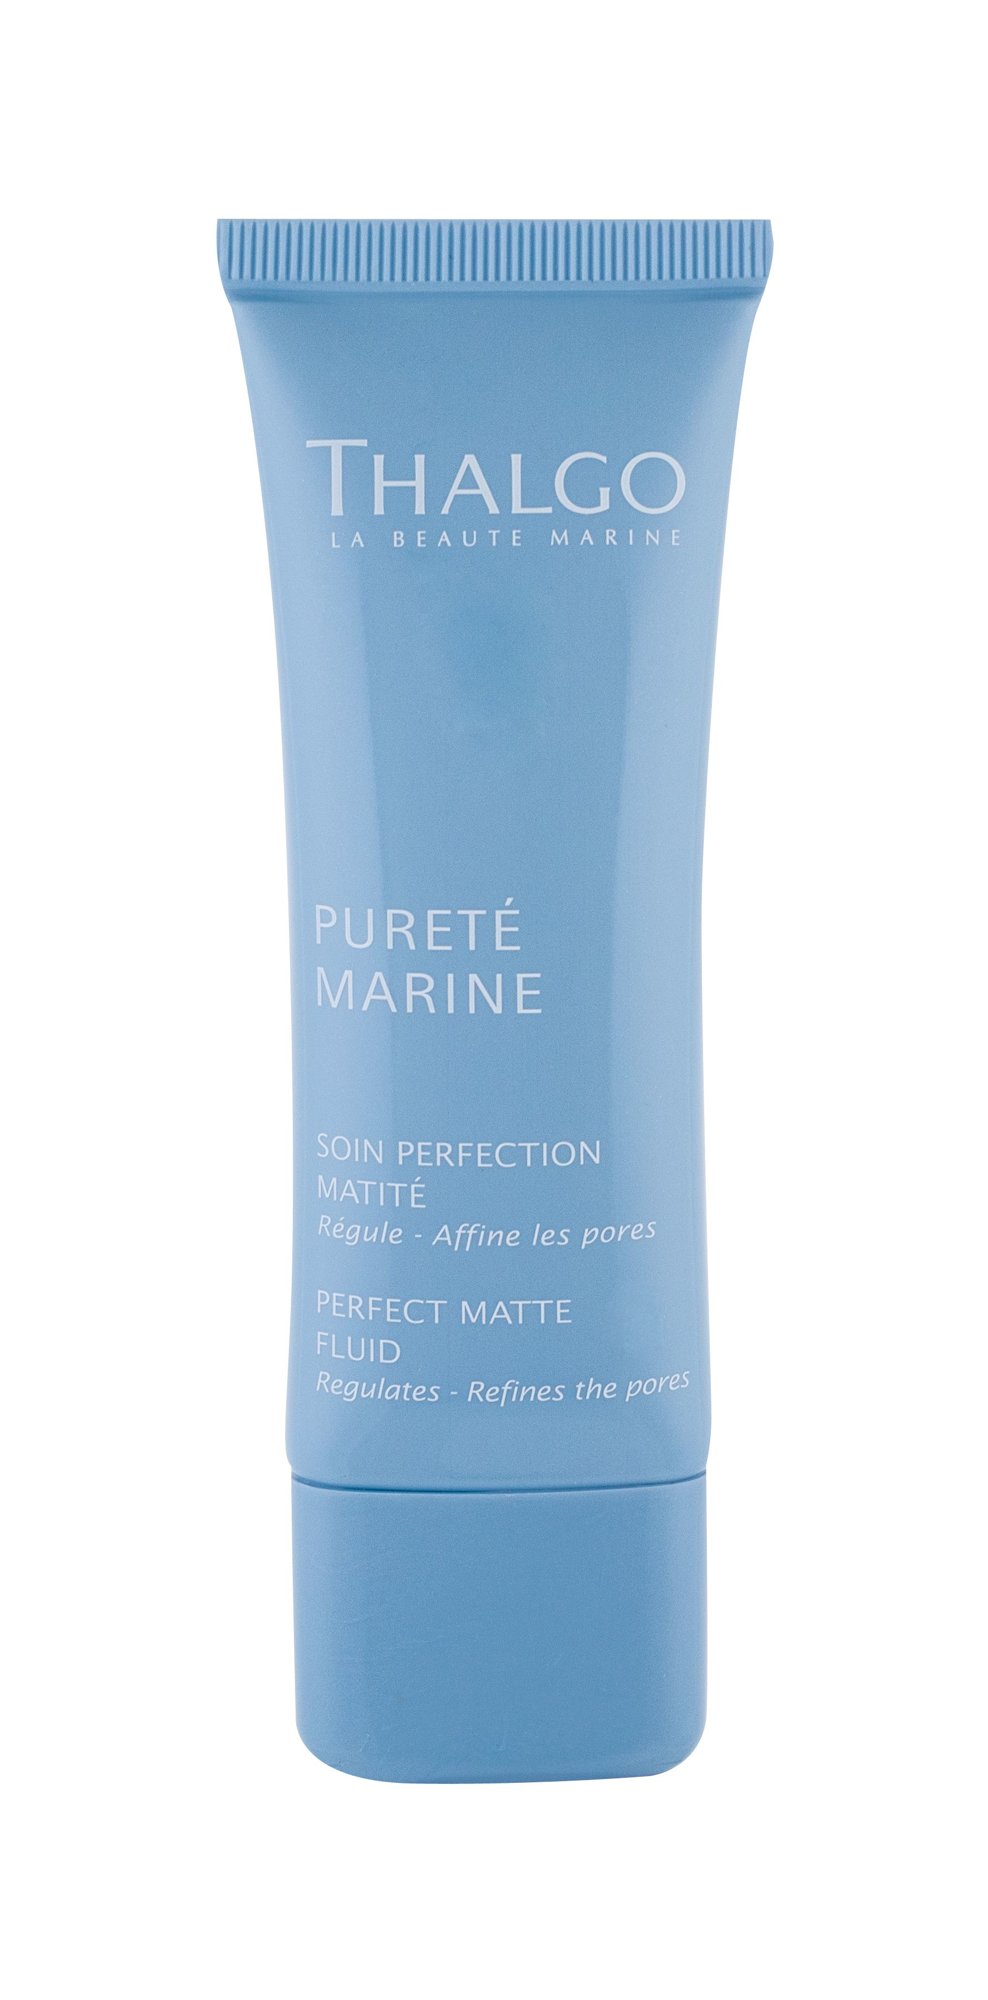 Thalgo Pureté Marine Perfect Matte Fluid veido gelis